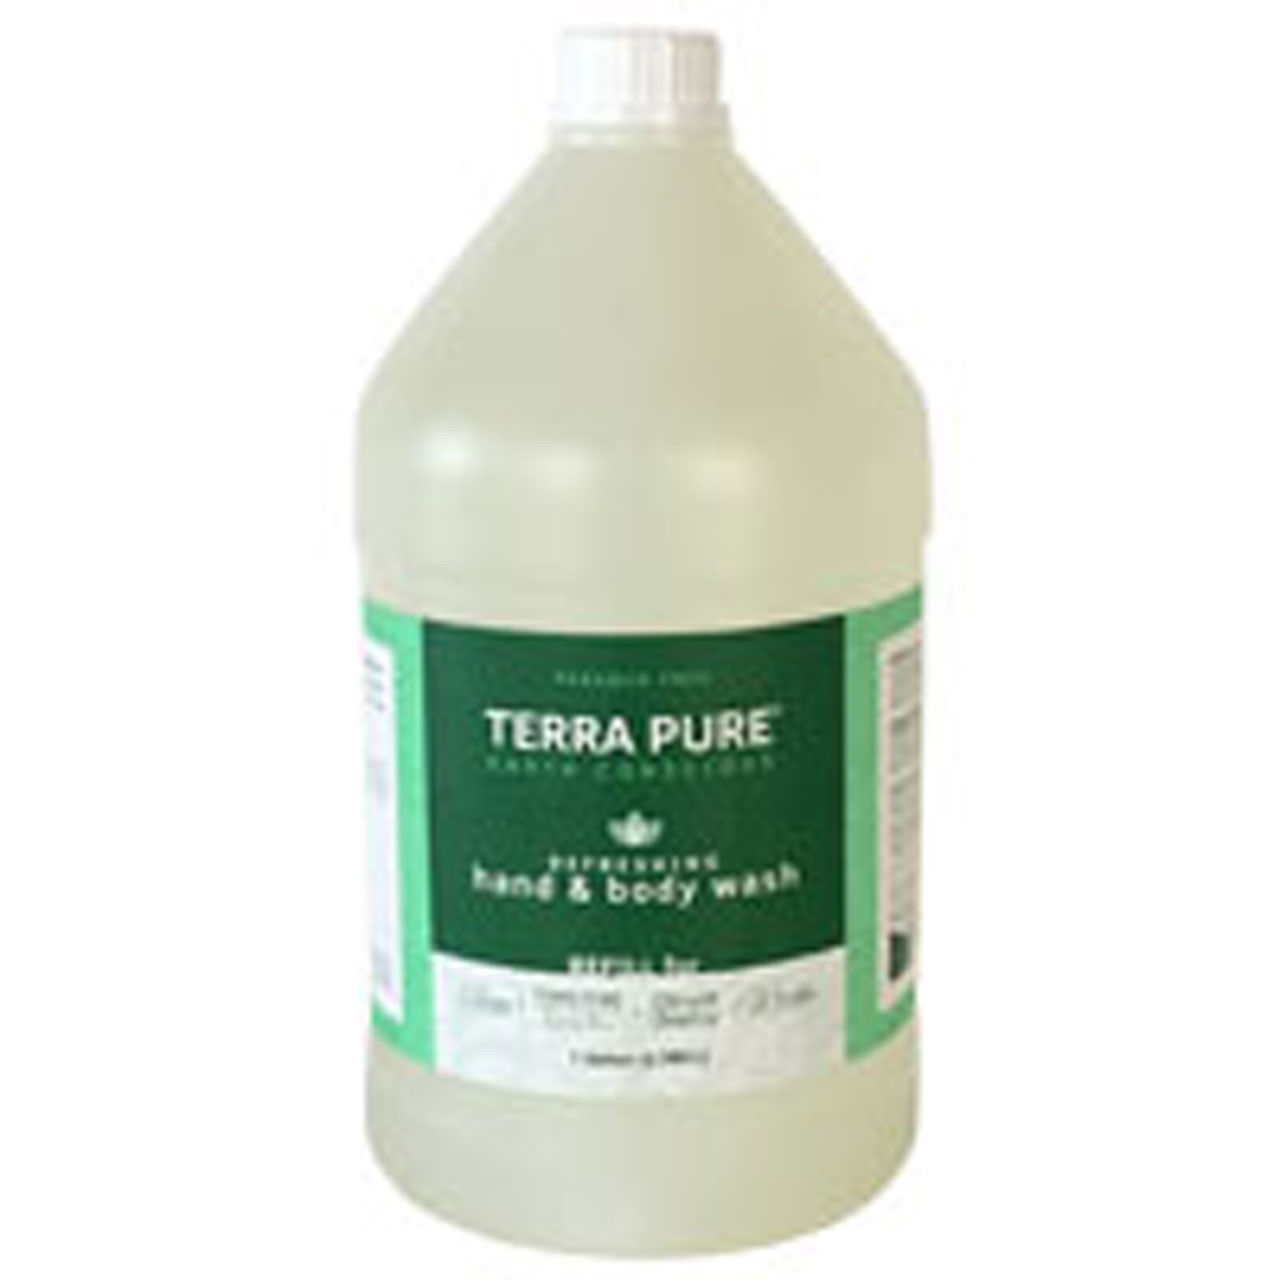 Terra Pure Green Tea Bulk Questions & Answers